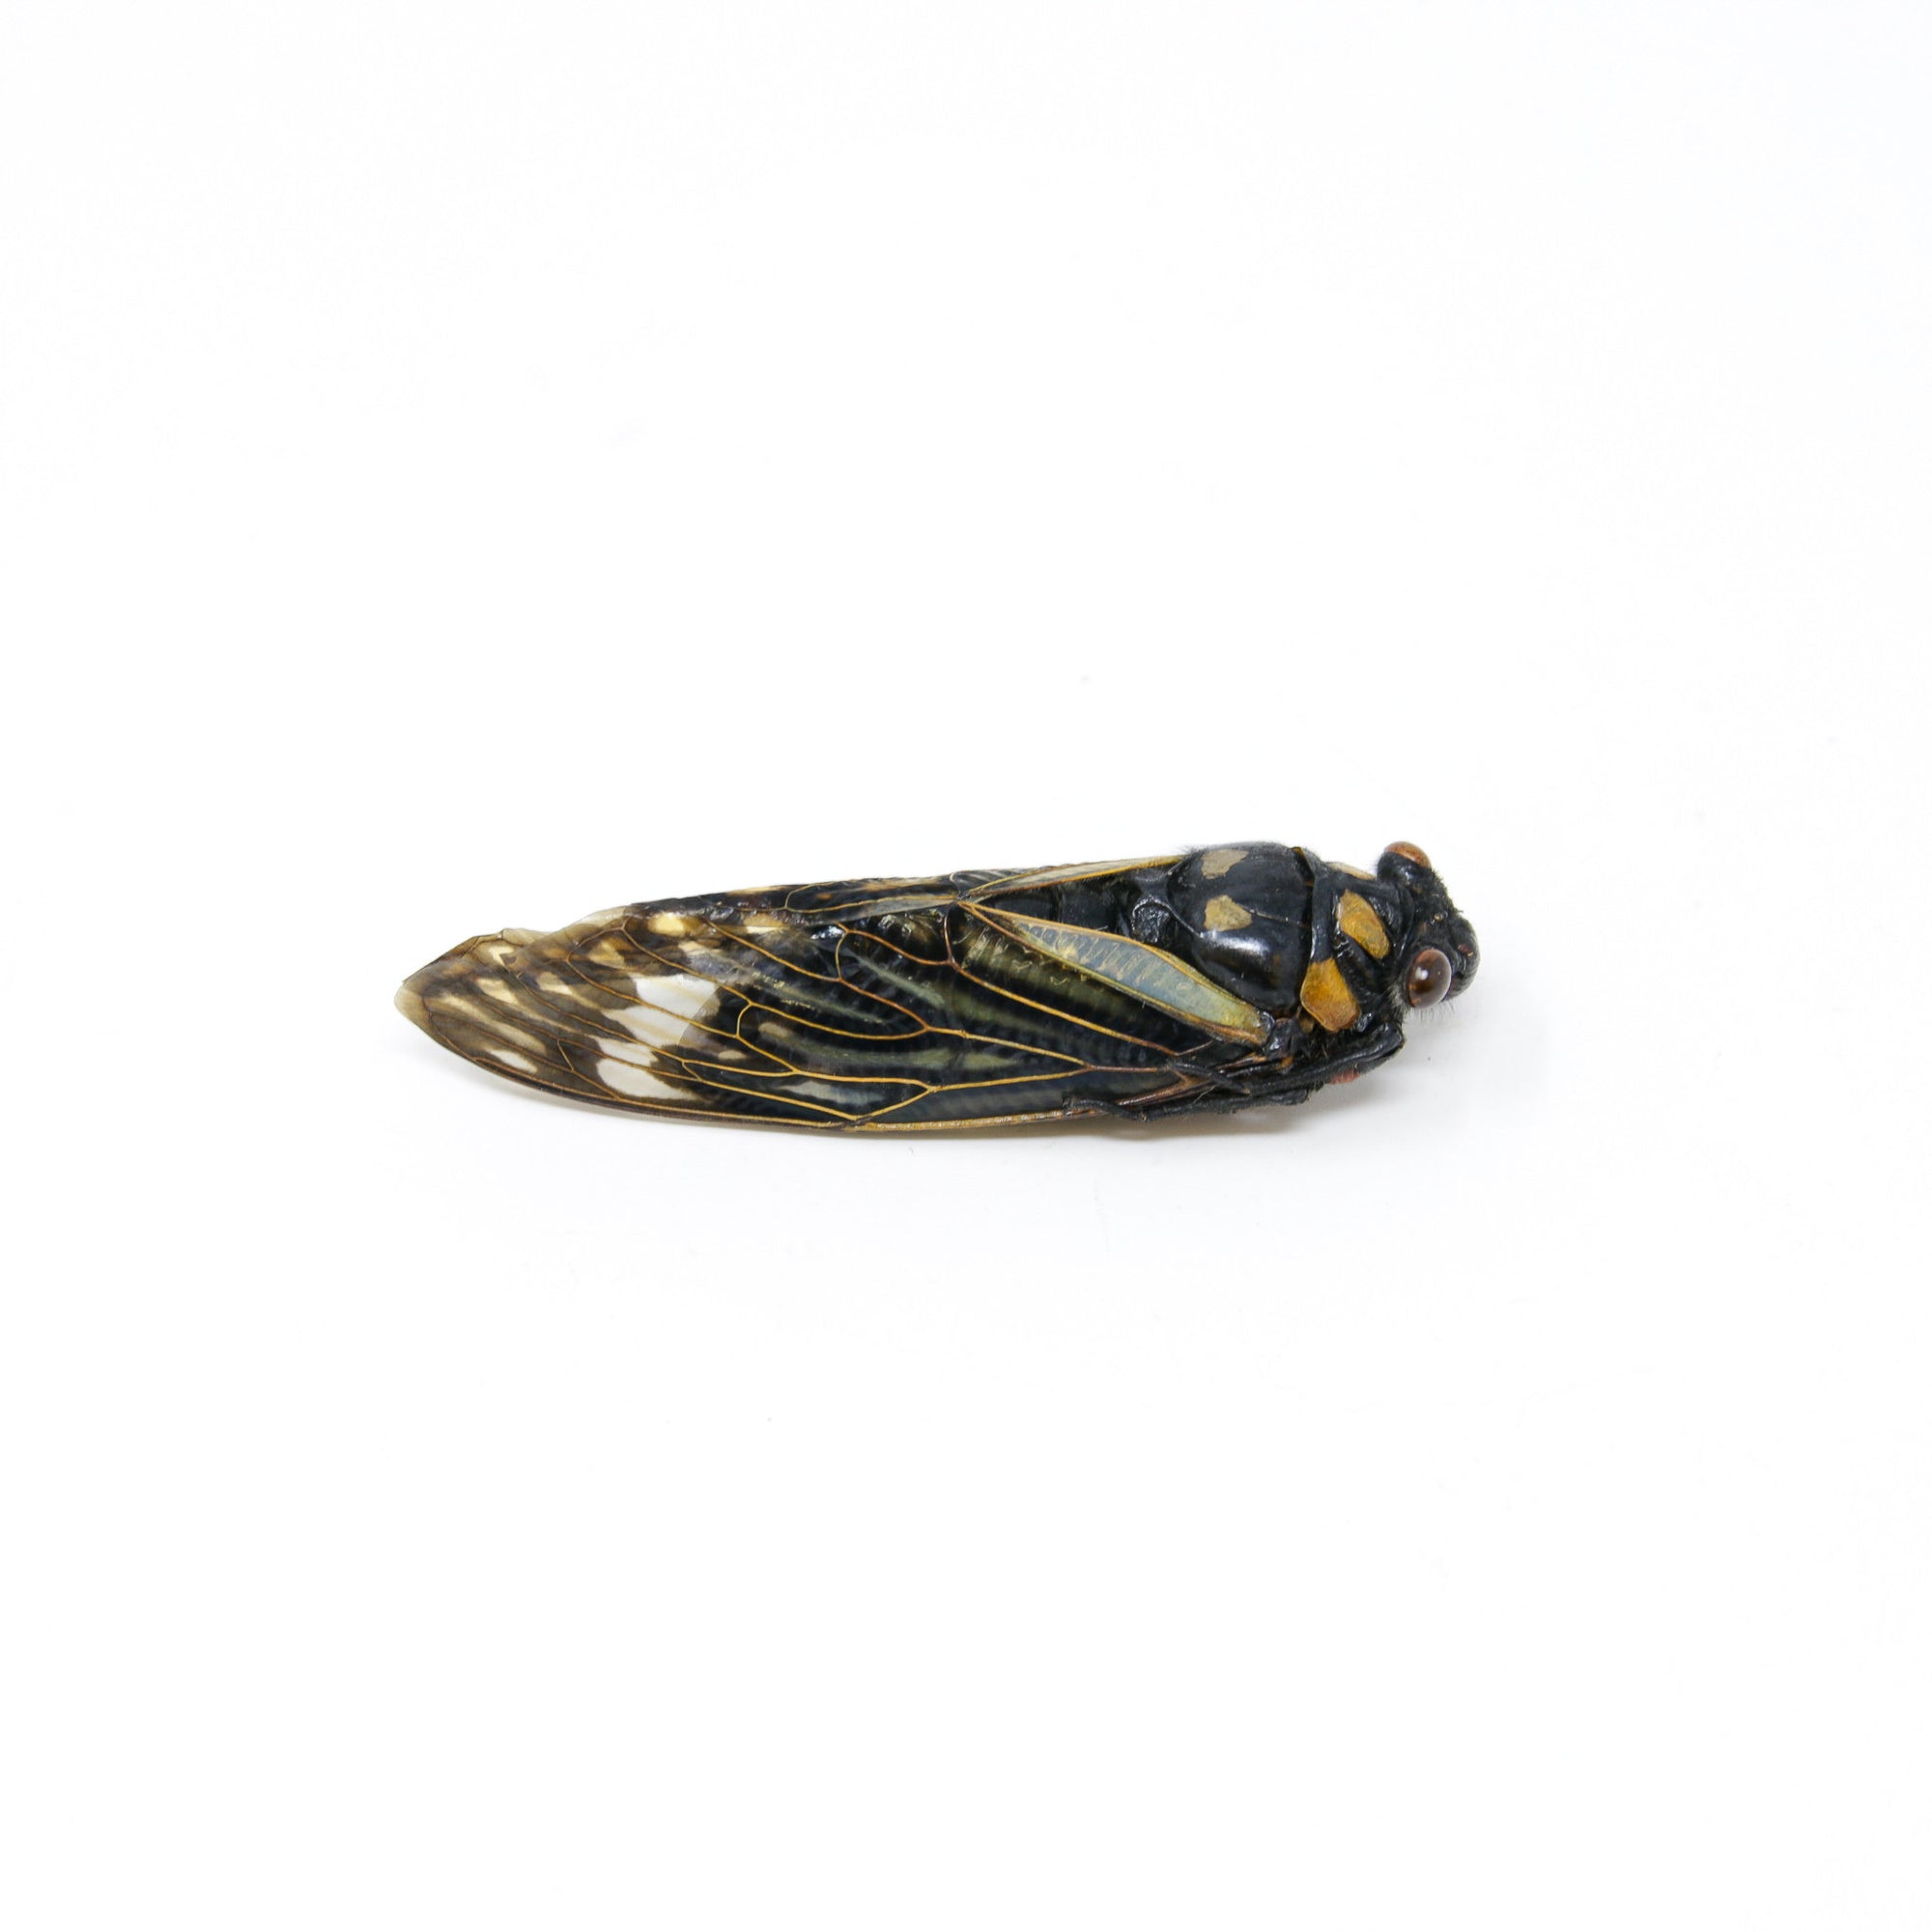 10 x Tosena splendida | Blue Cicada | Unmounted Specimen WINGS CLOSED A2 QUALITY